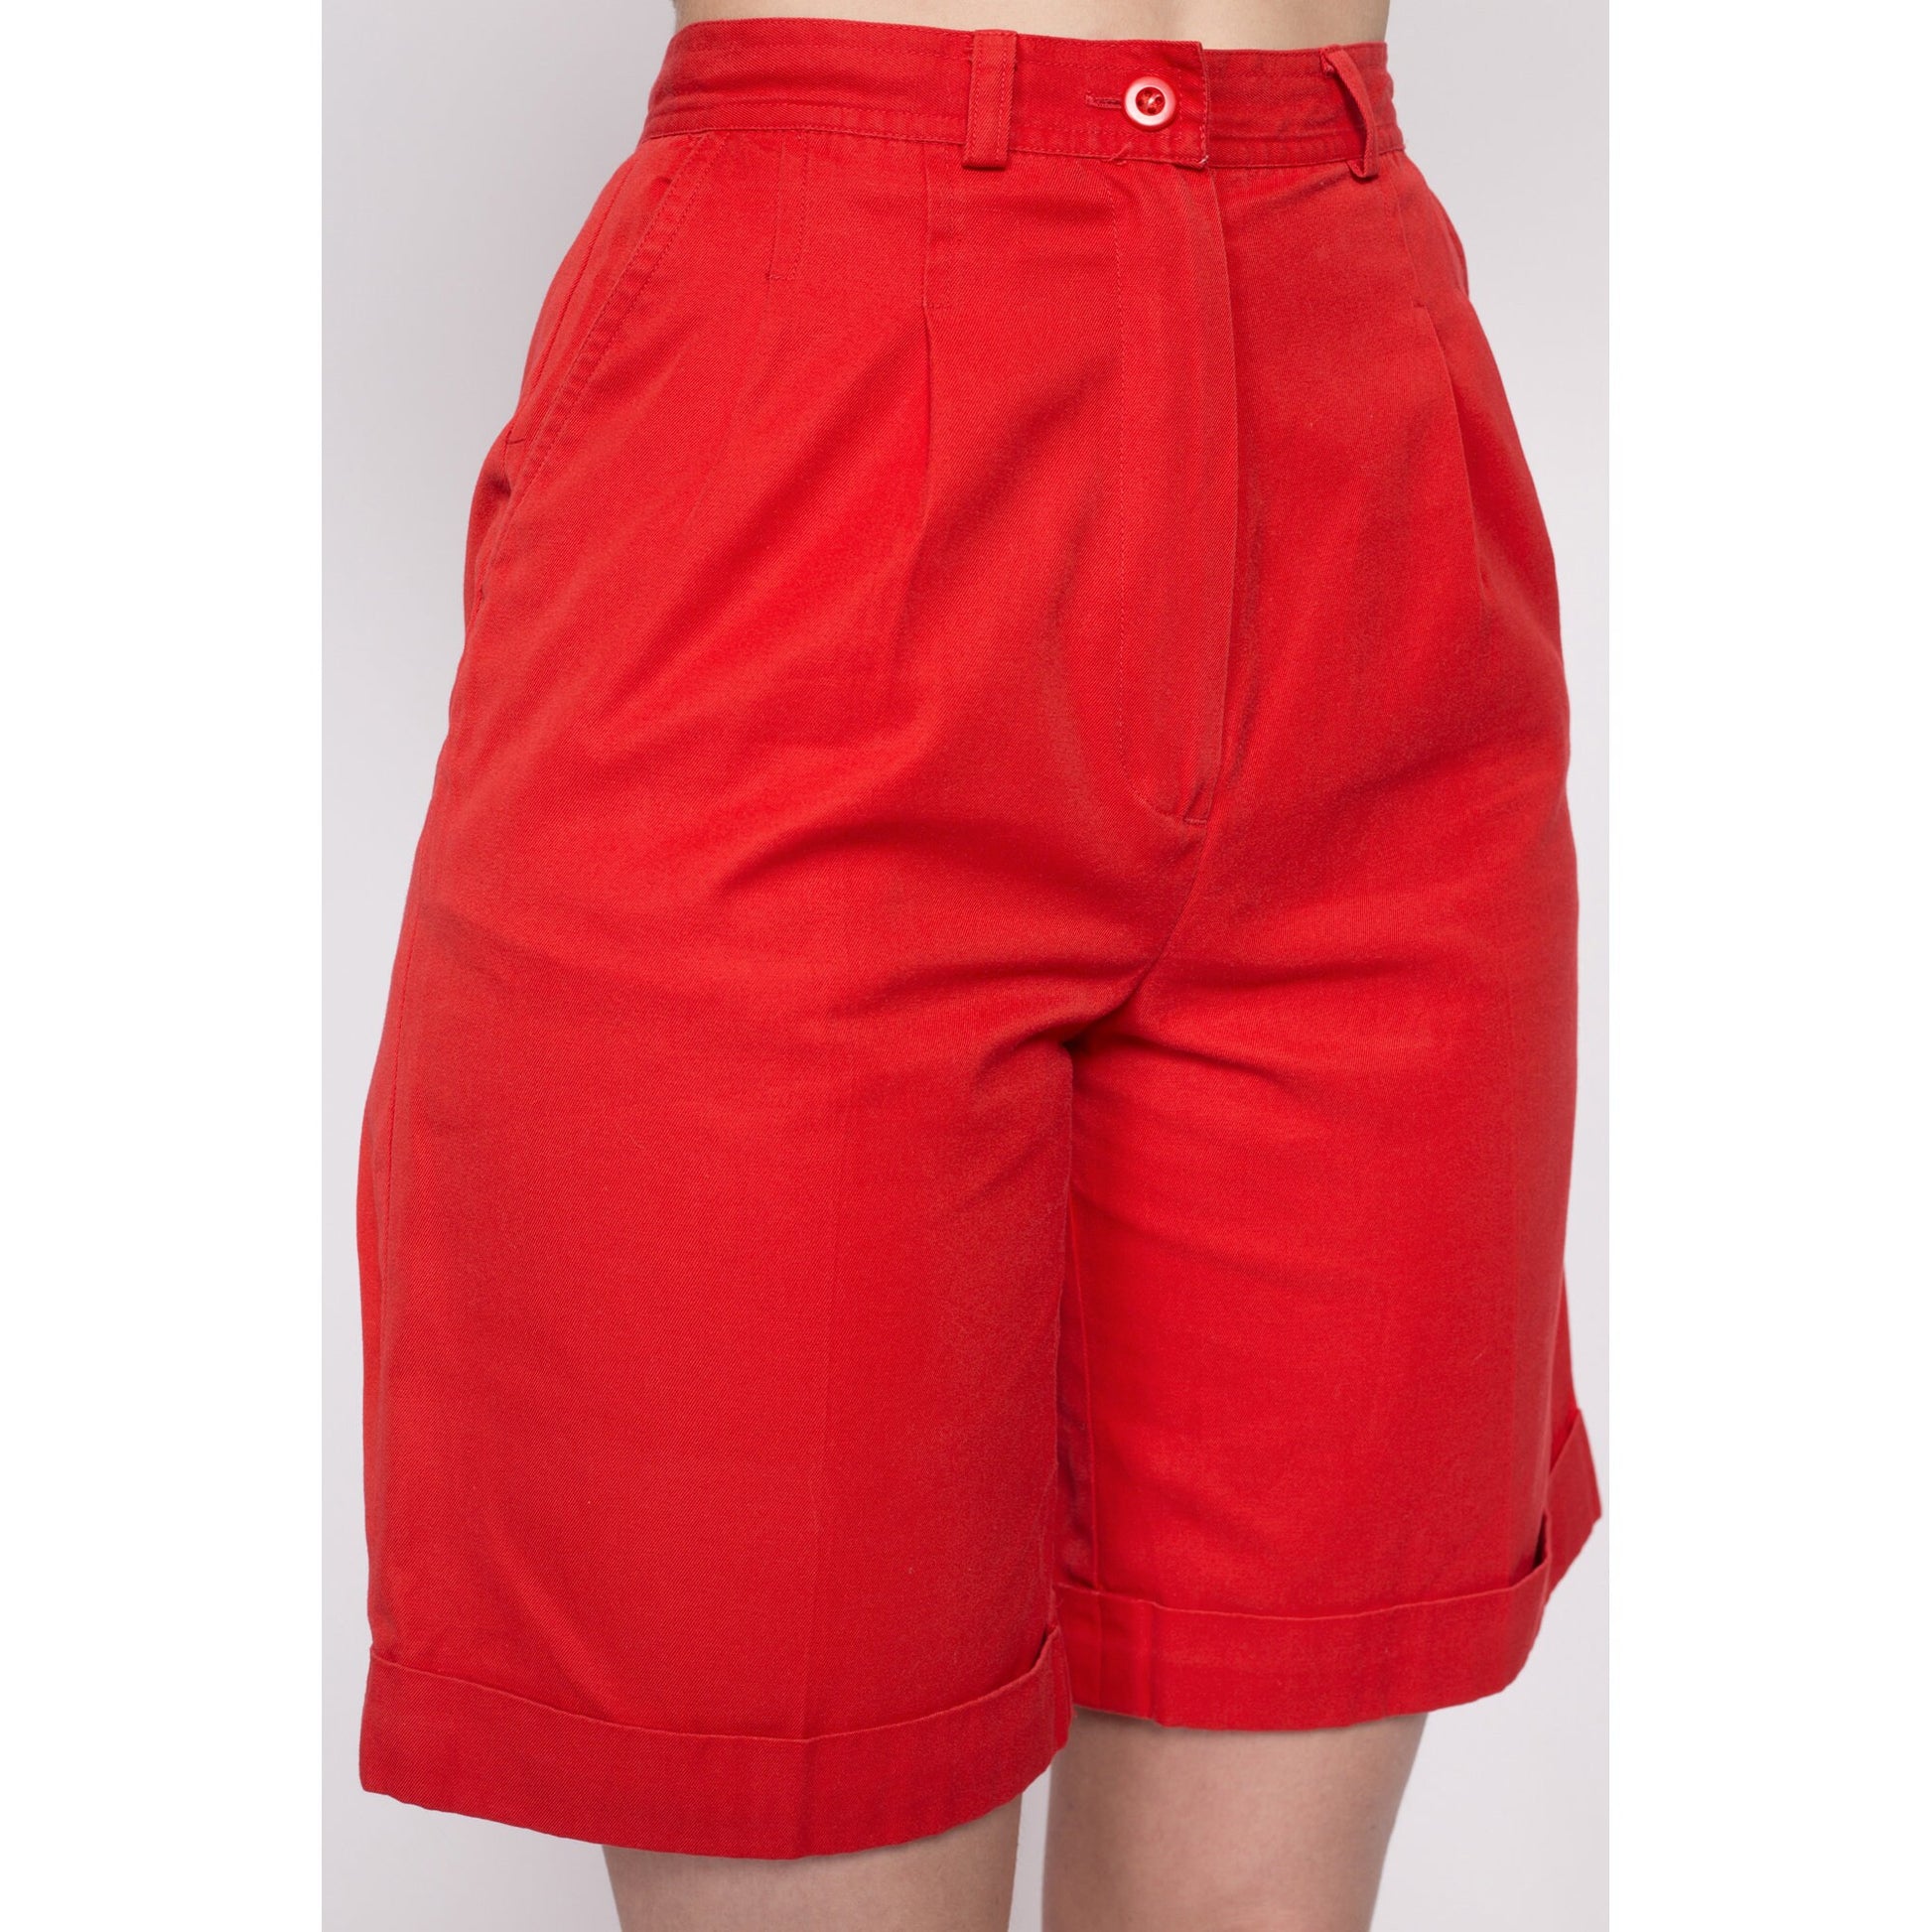 Red Basic High Waisted Shorts